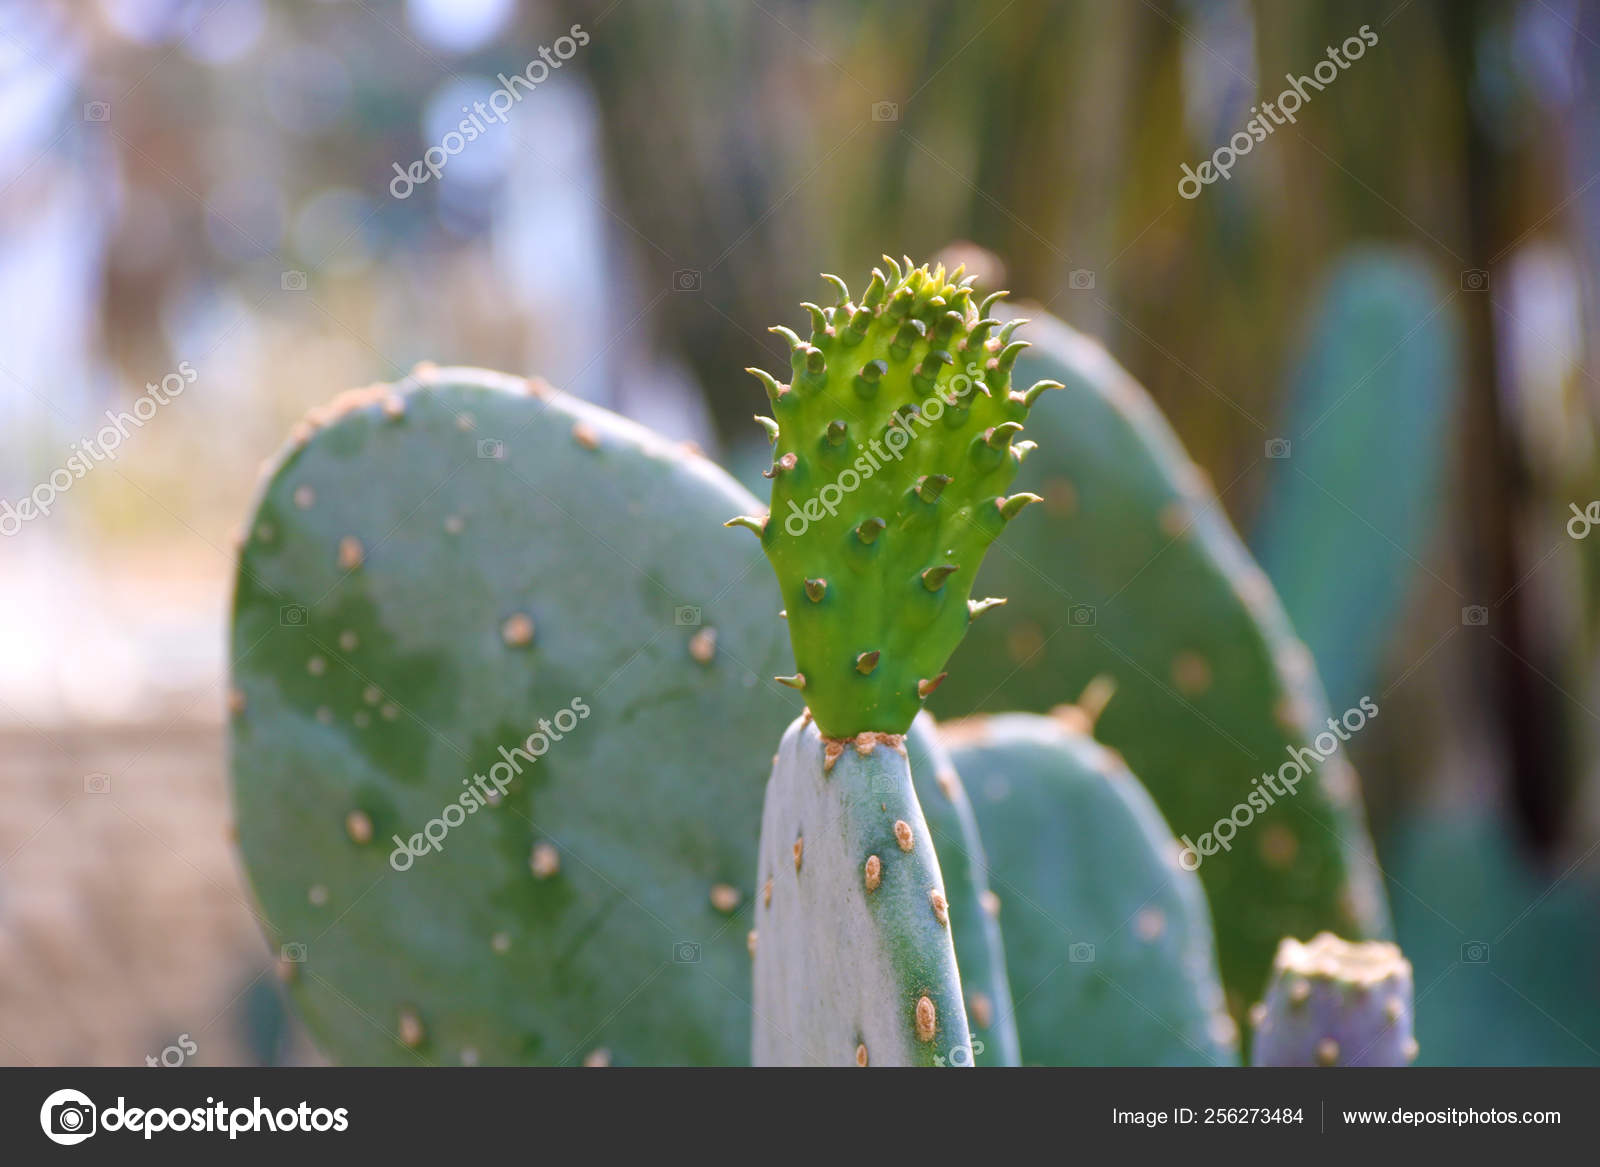 Stockfotos Kaktus mit stacheln Bilder, Stockfotografie Kaktus mit ...